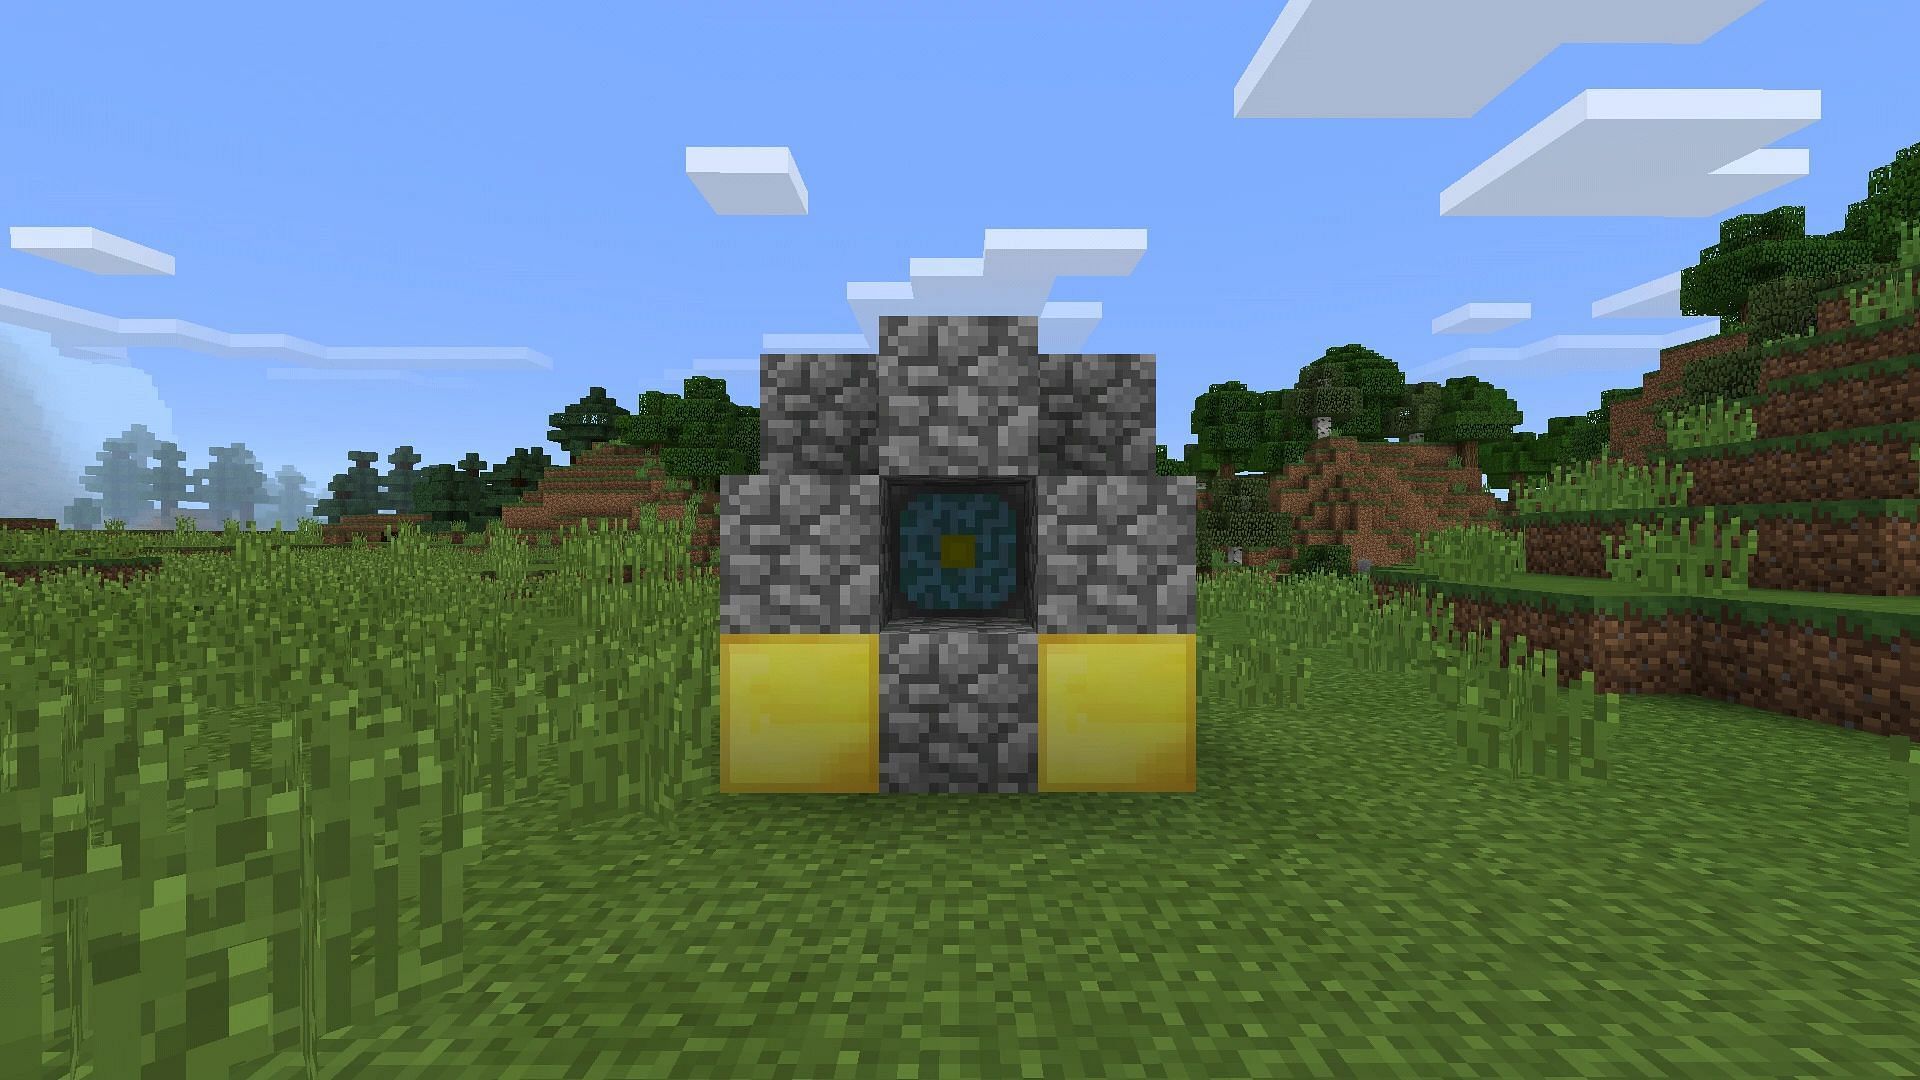 Nether reactor construction in Minecraft Pocket Edition (Image via Mojang)